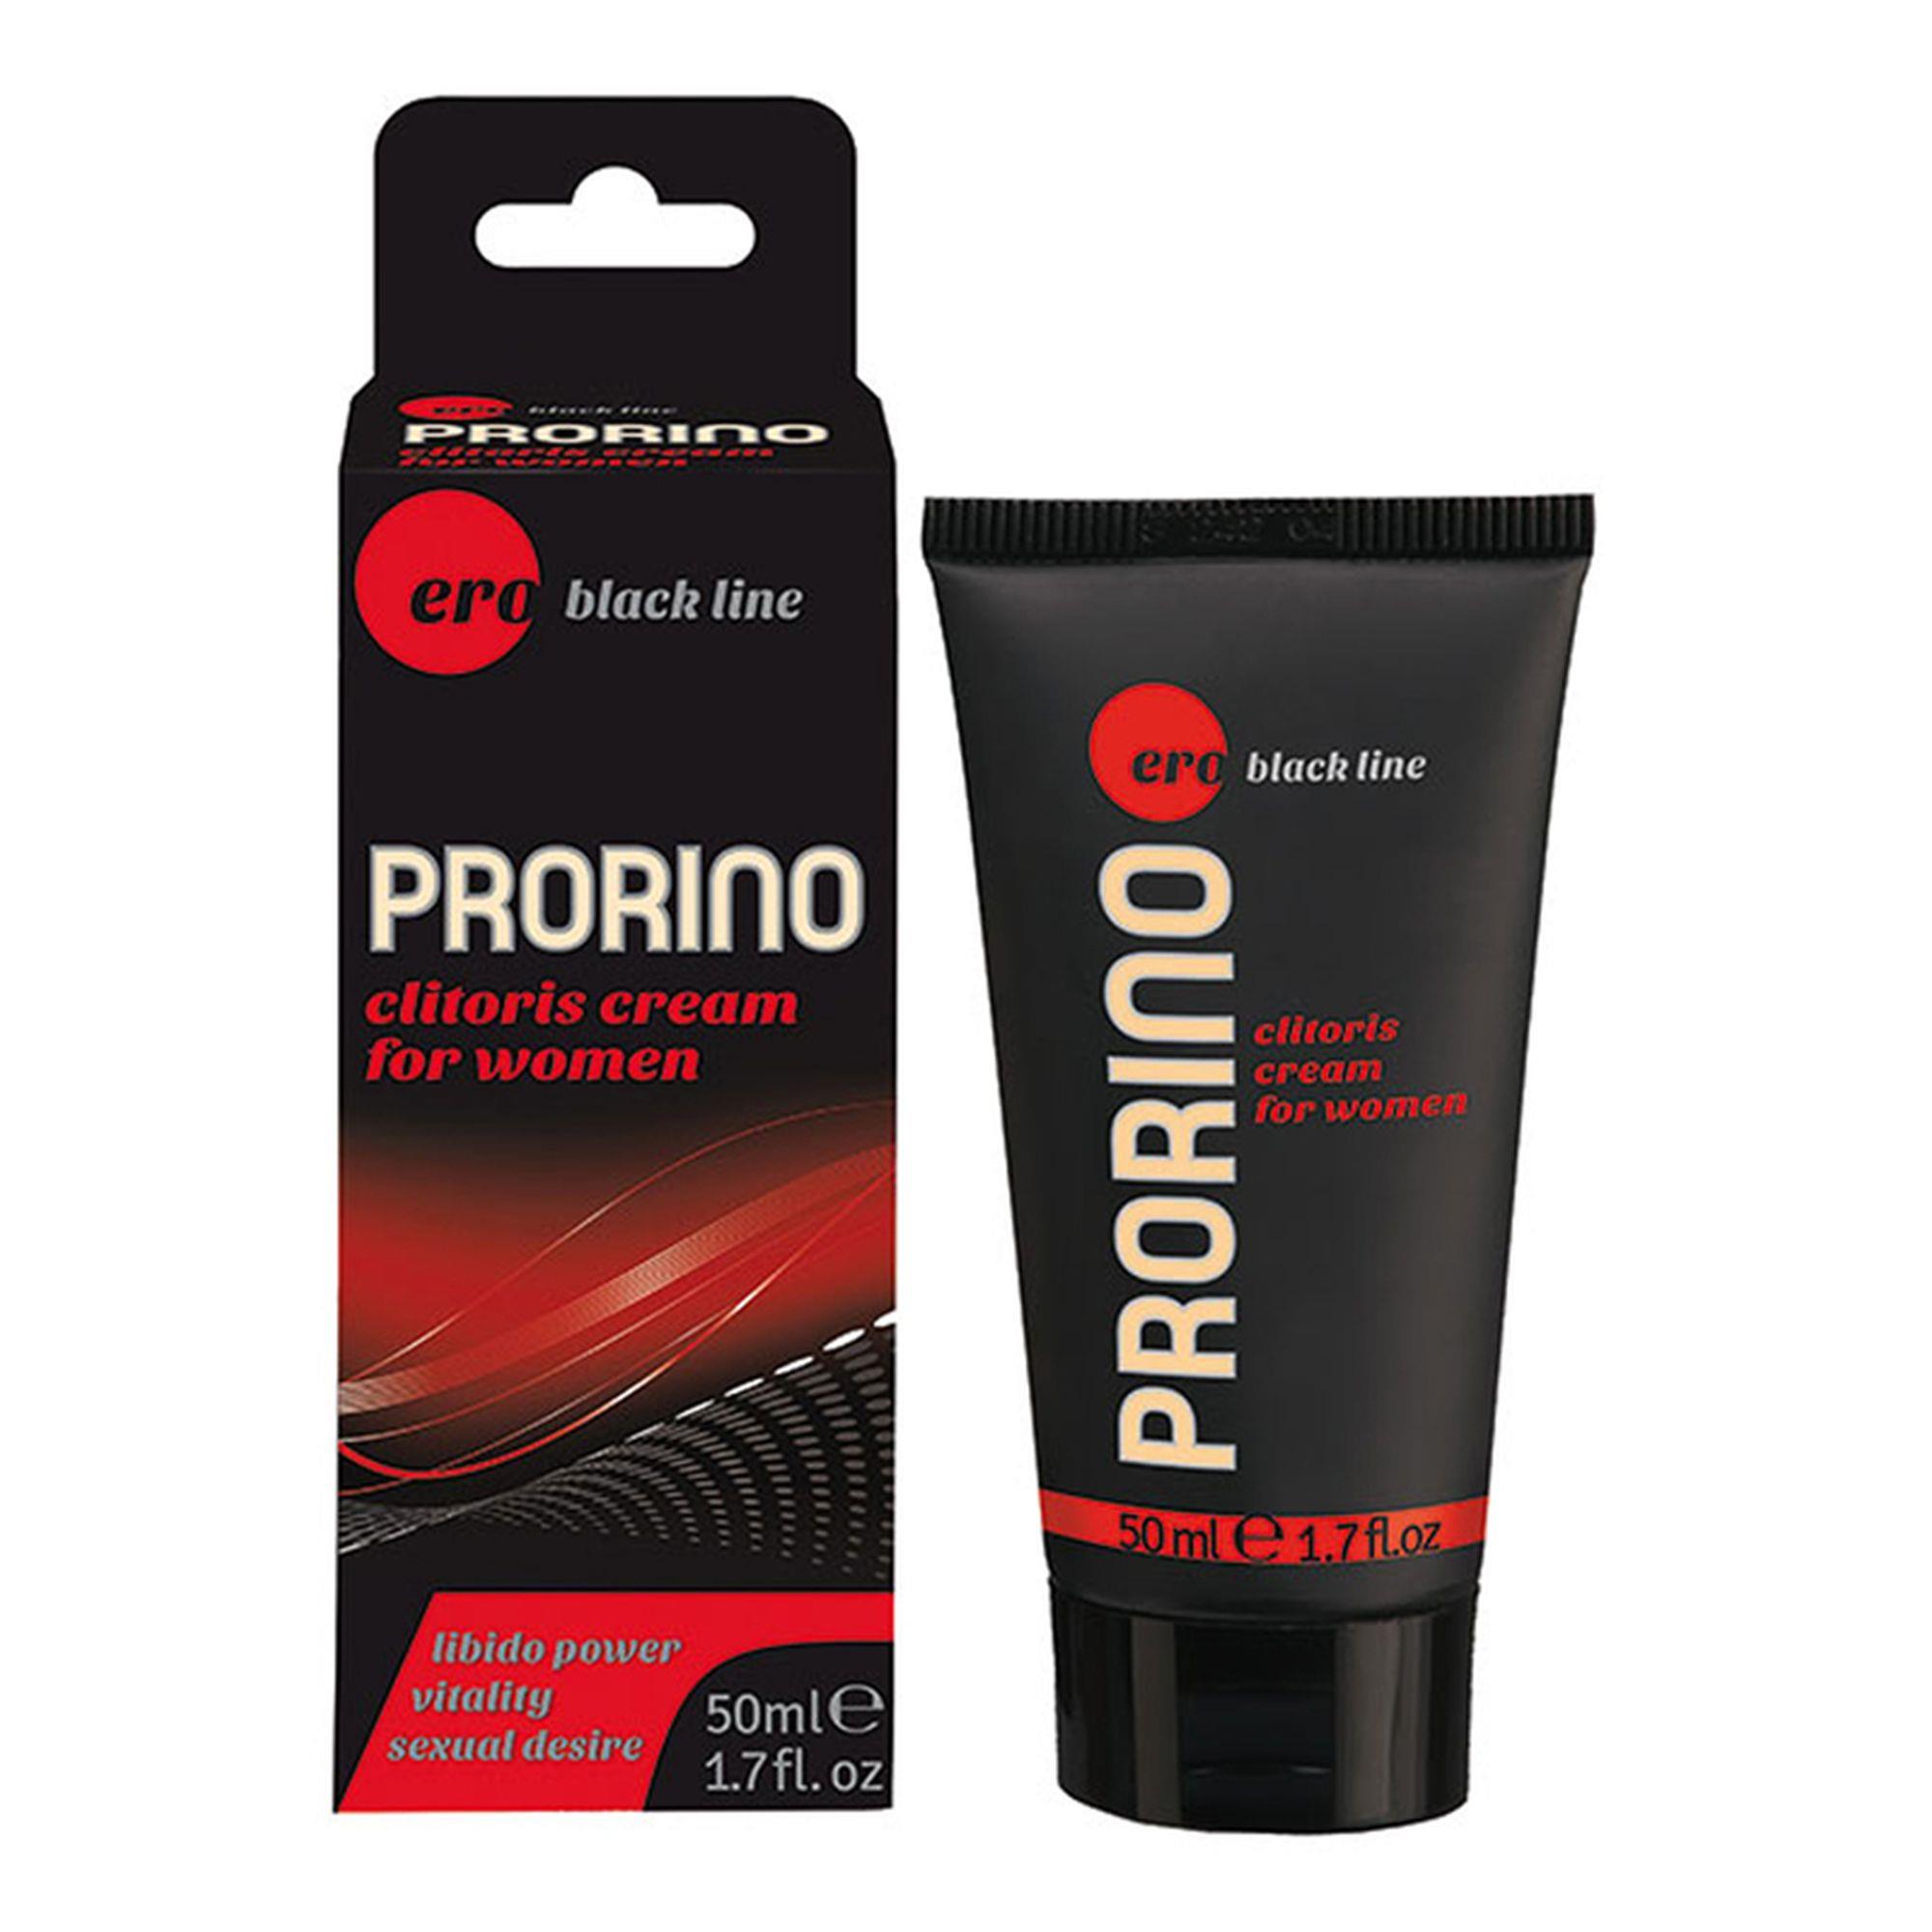 PRORINO Women black line clitoris cream - 50ml 